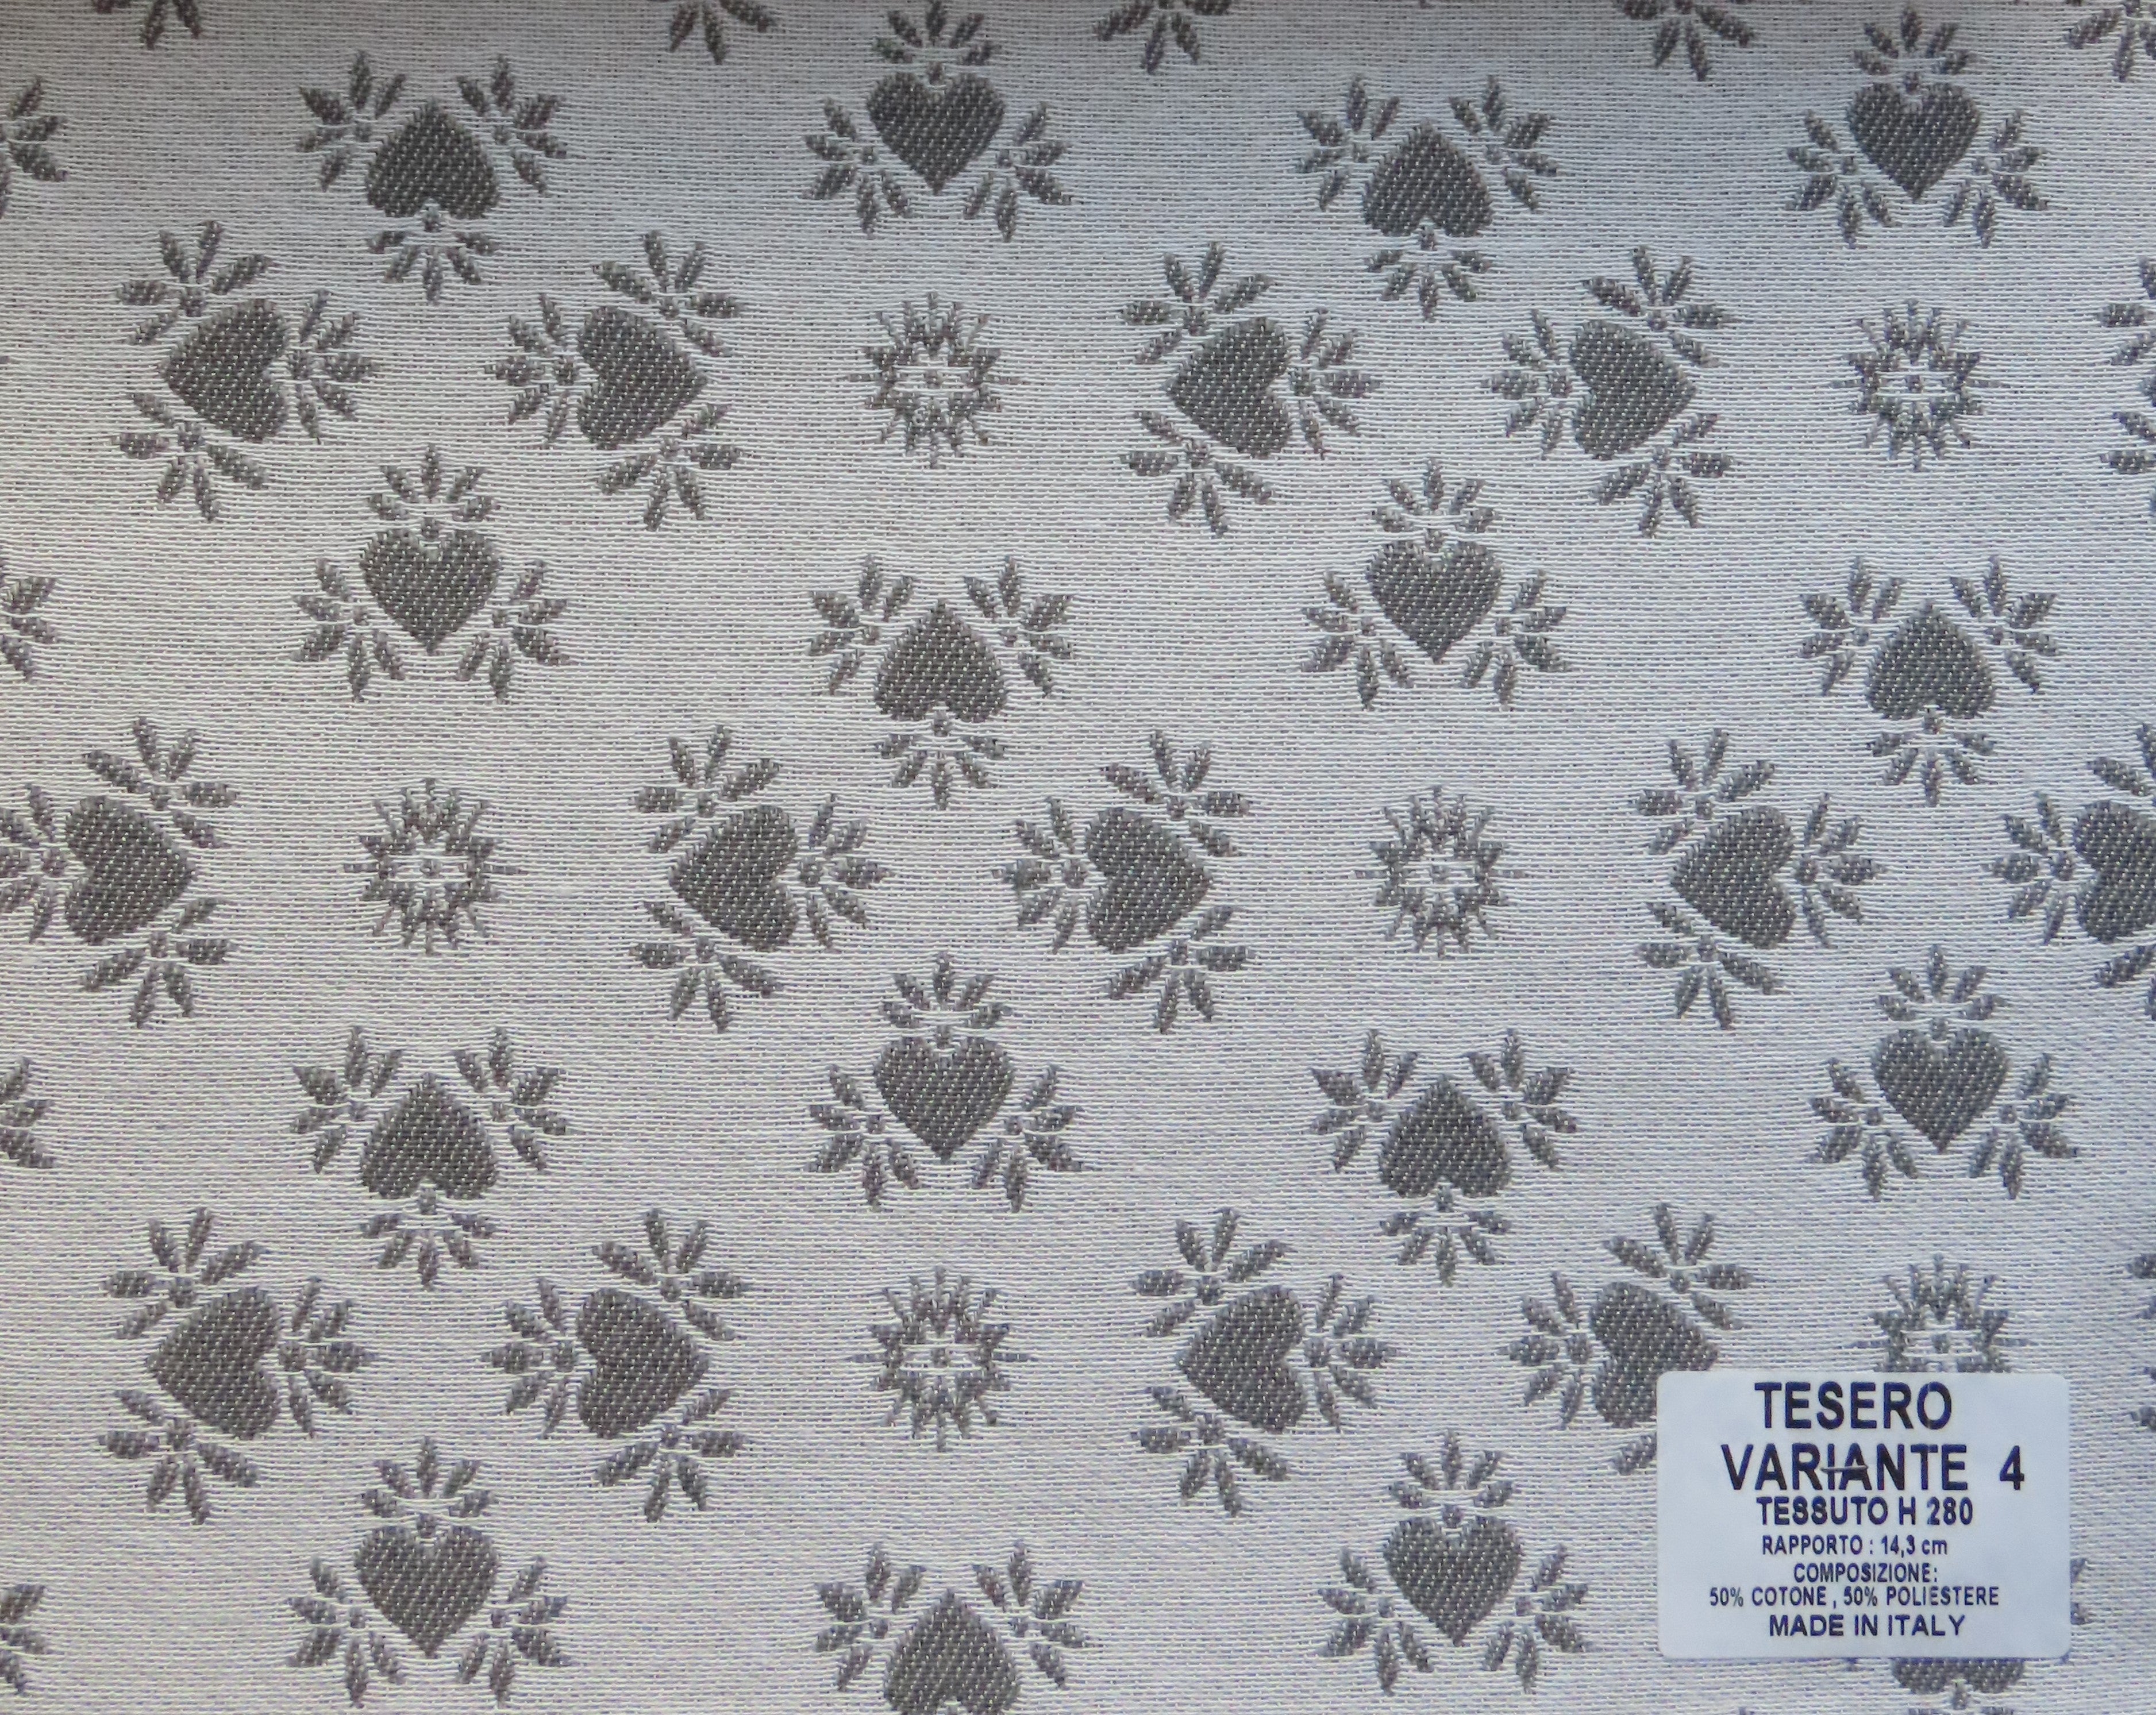 Tessuto in stile tirolese made in italy